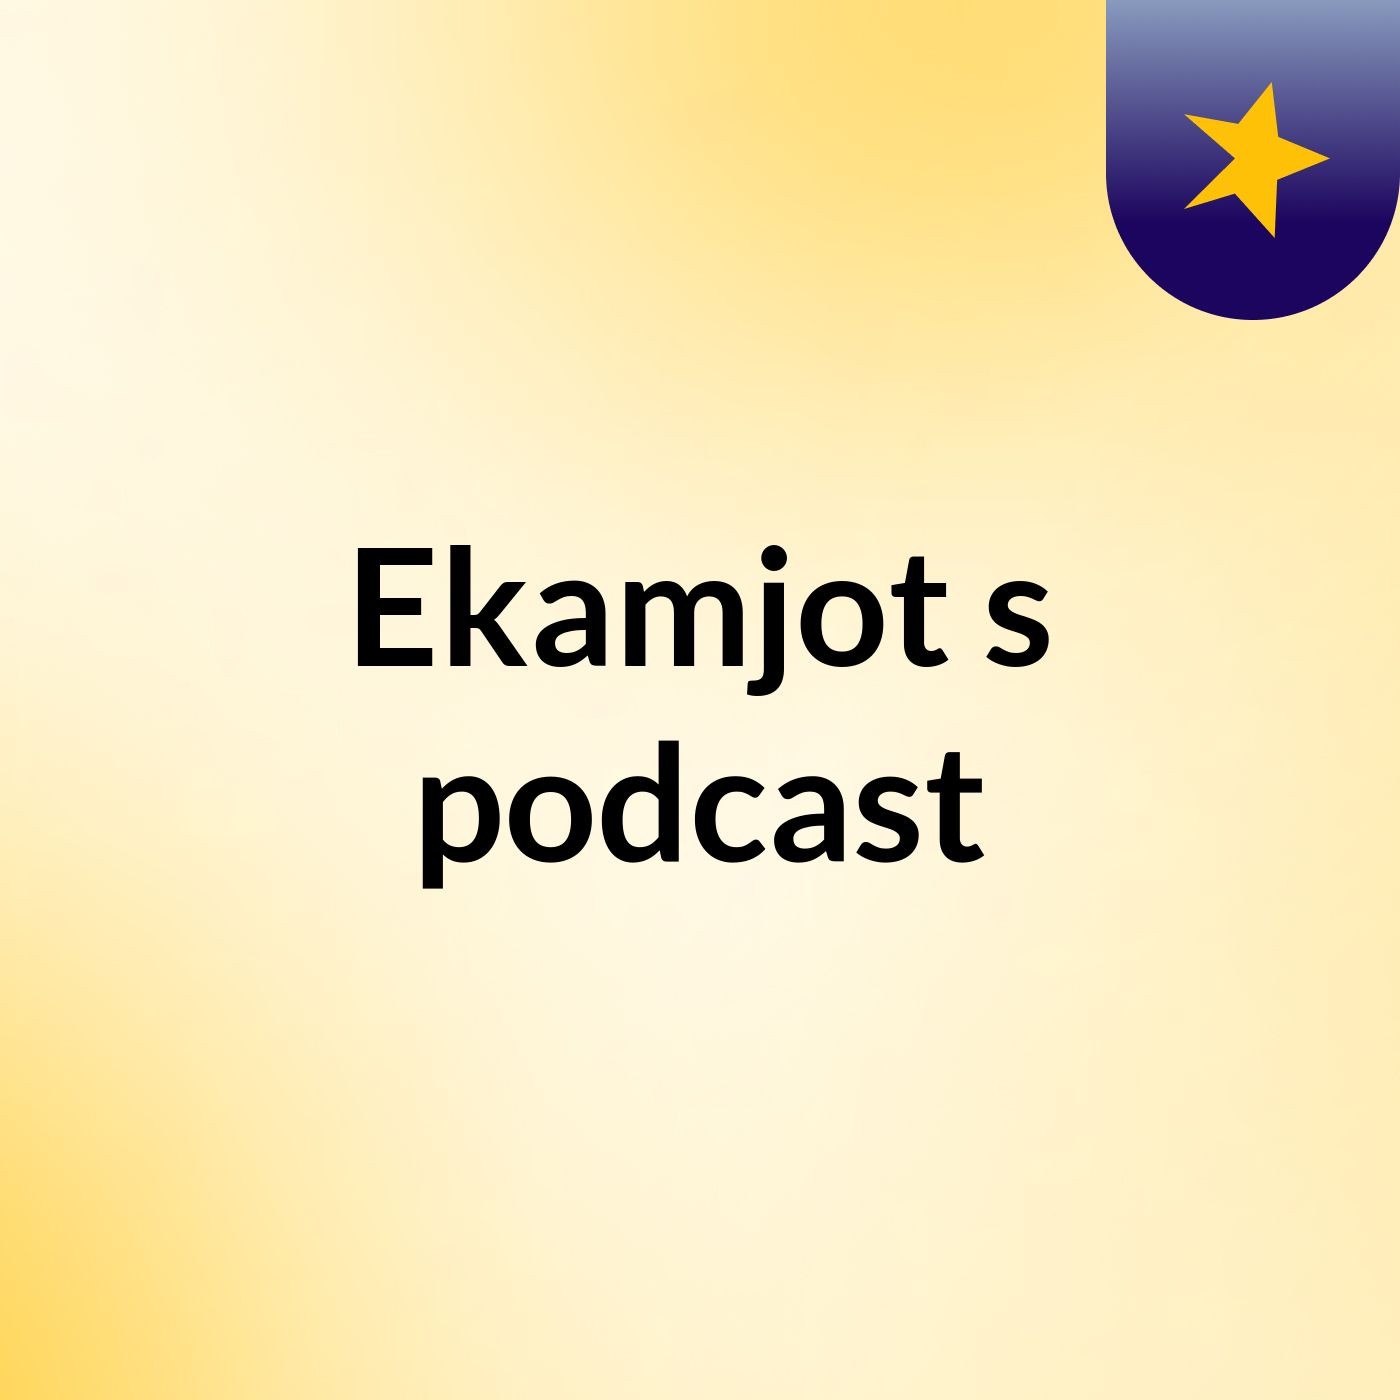 Ekamjot's podcast